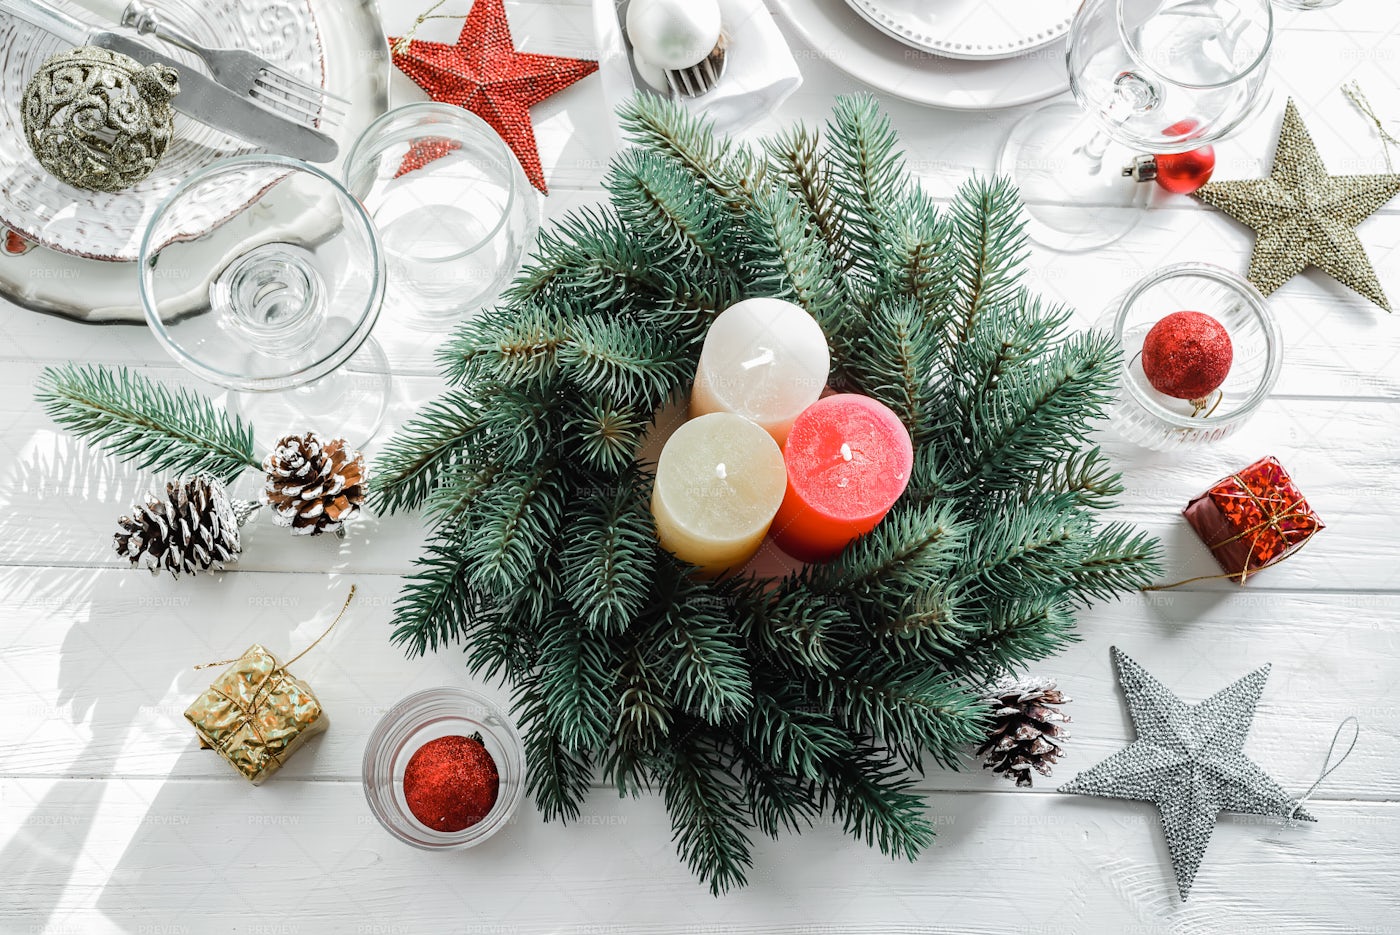 Christmas Table Decorations: Stock Photos